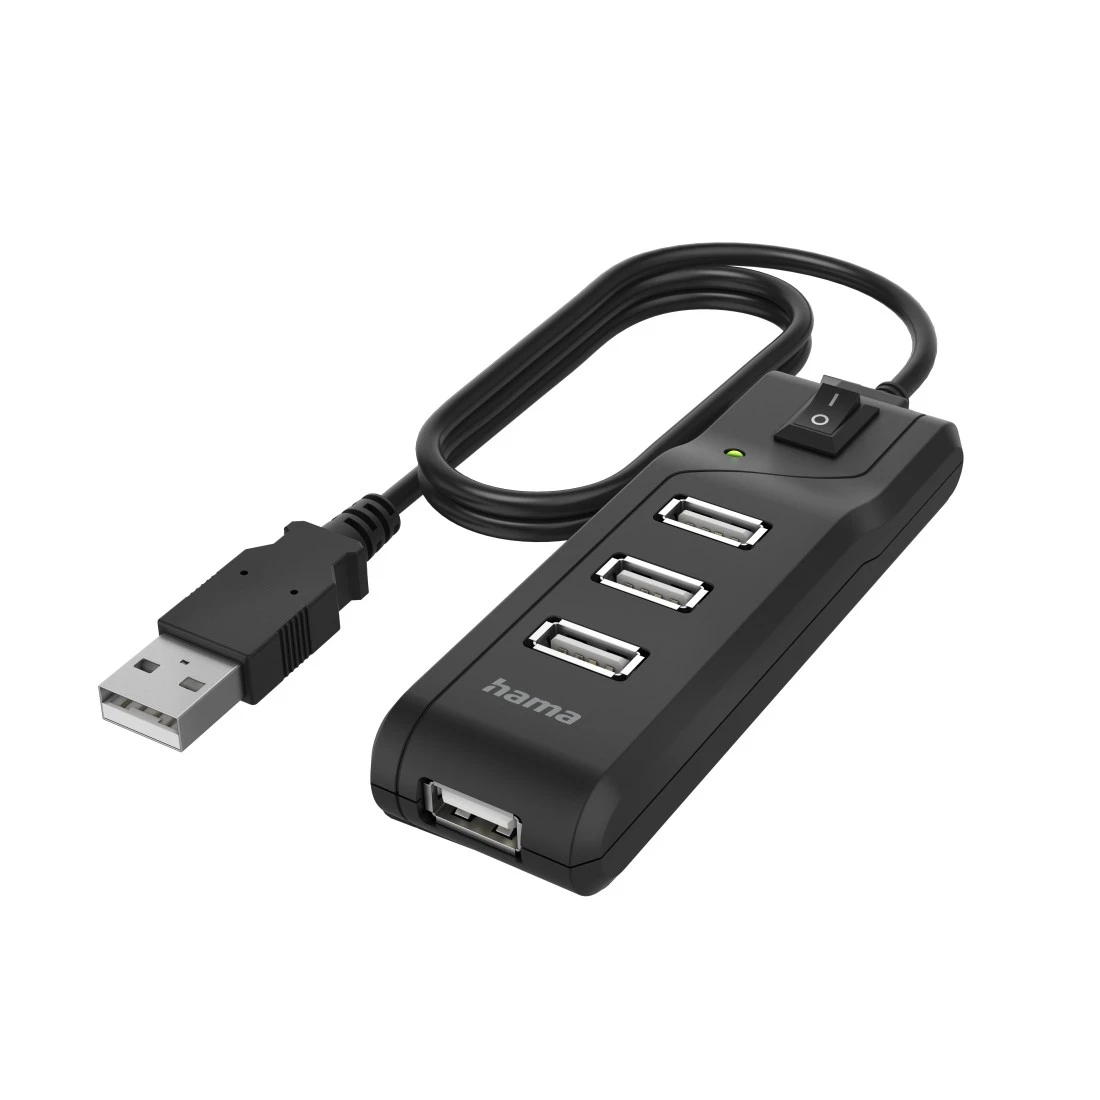 Concentrador USB, 4 puertos, USB 2.0, 480 Mbit/s, interruptor on/off | Hama